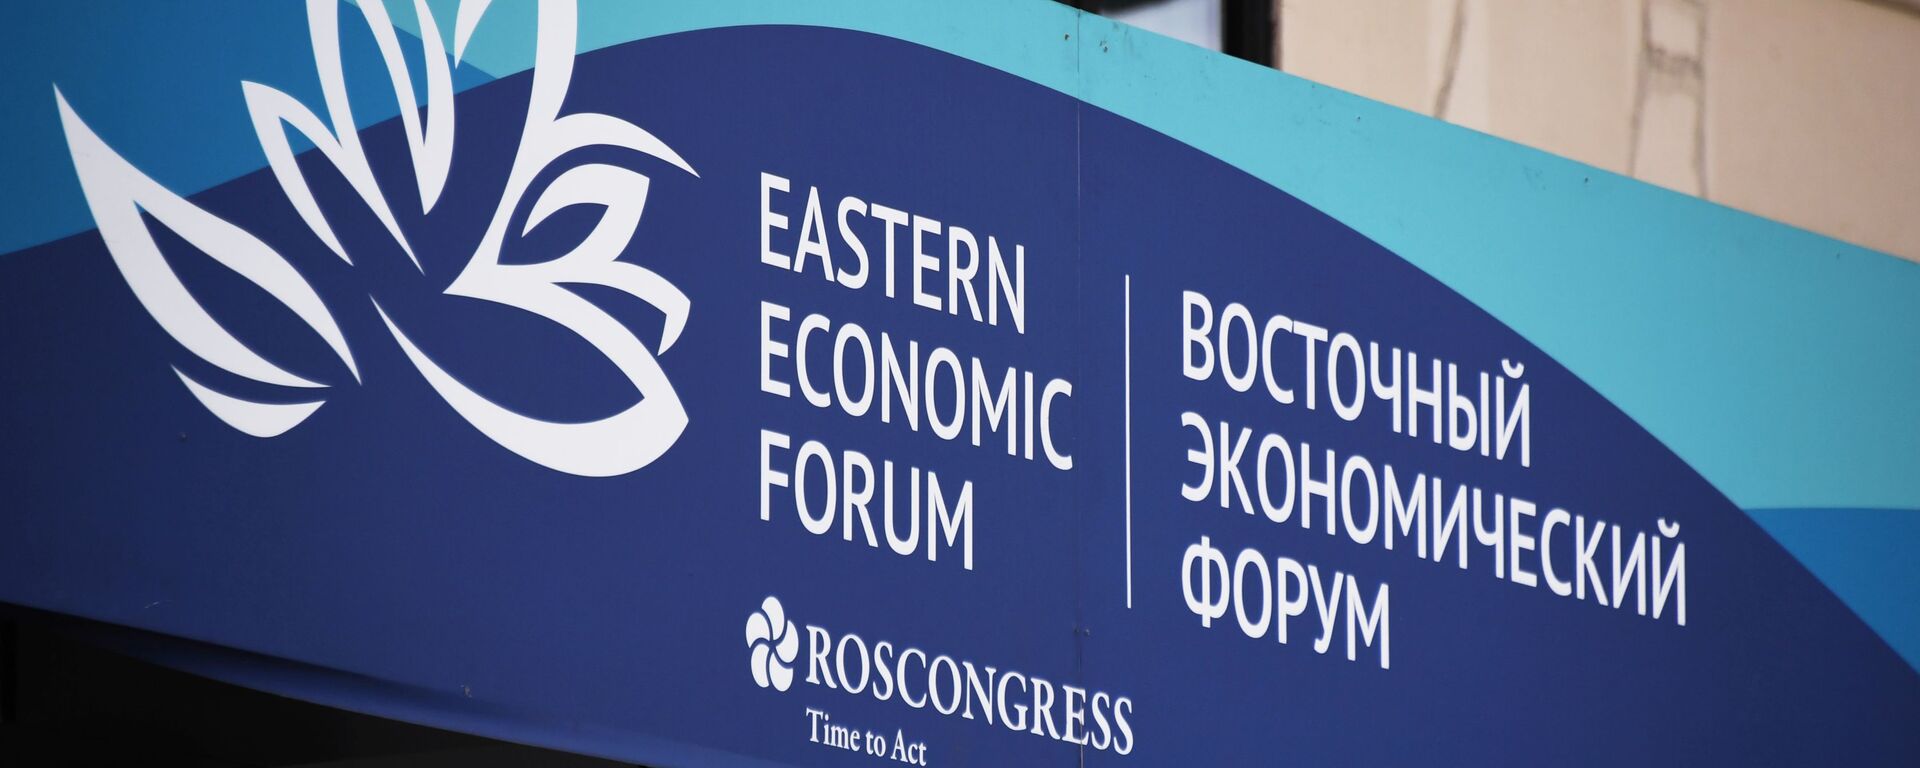 El logo del Foro Económico Oriental en Vladivostok, Rusia - Sputnik Mundo, 1920, 06.09.2022